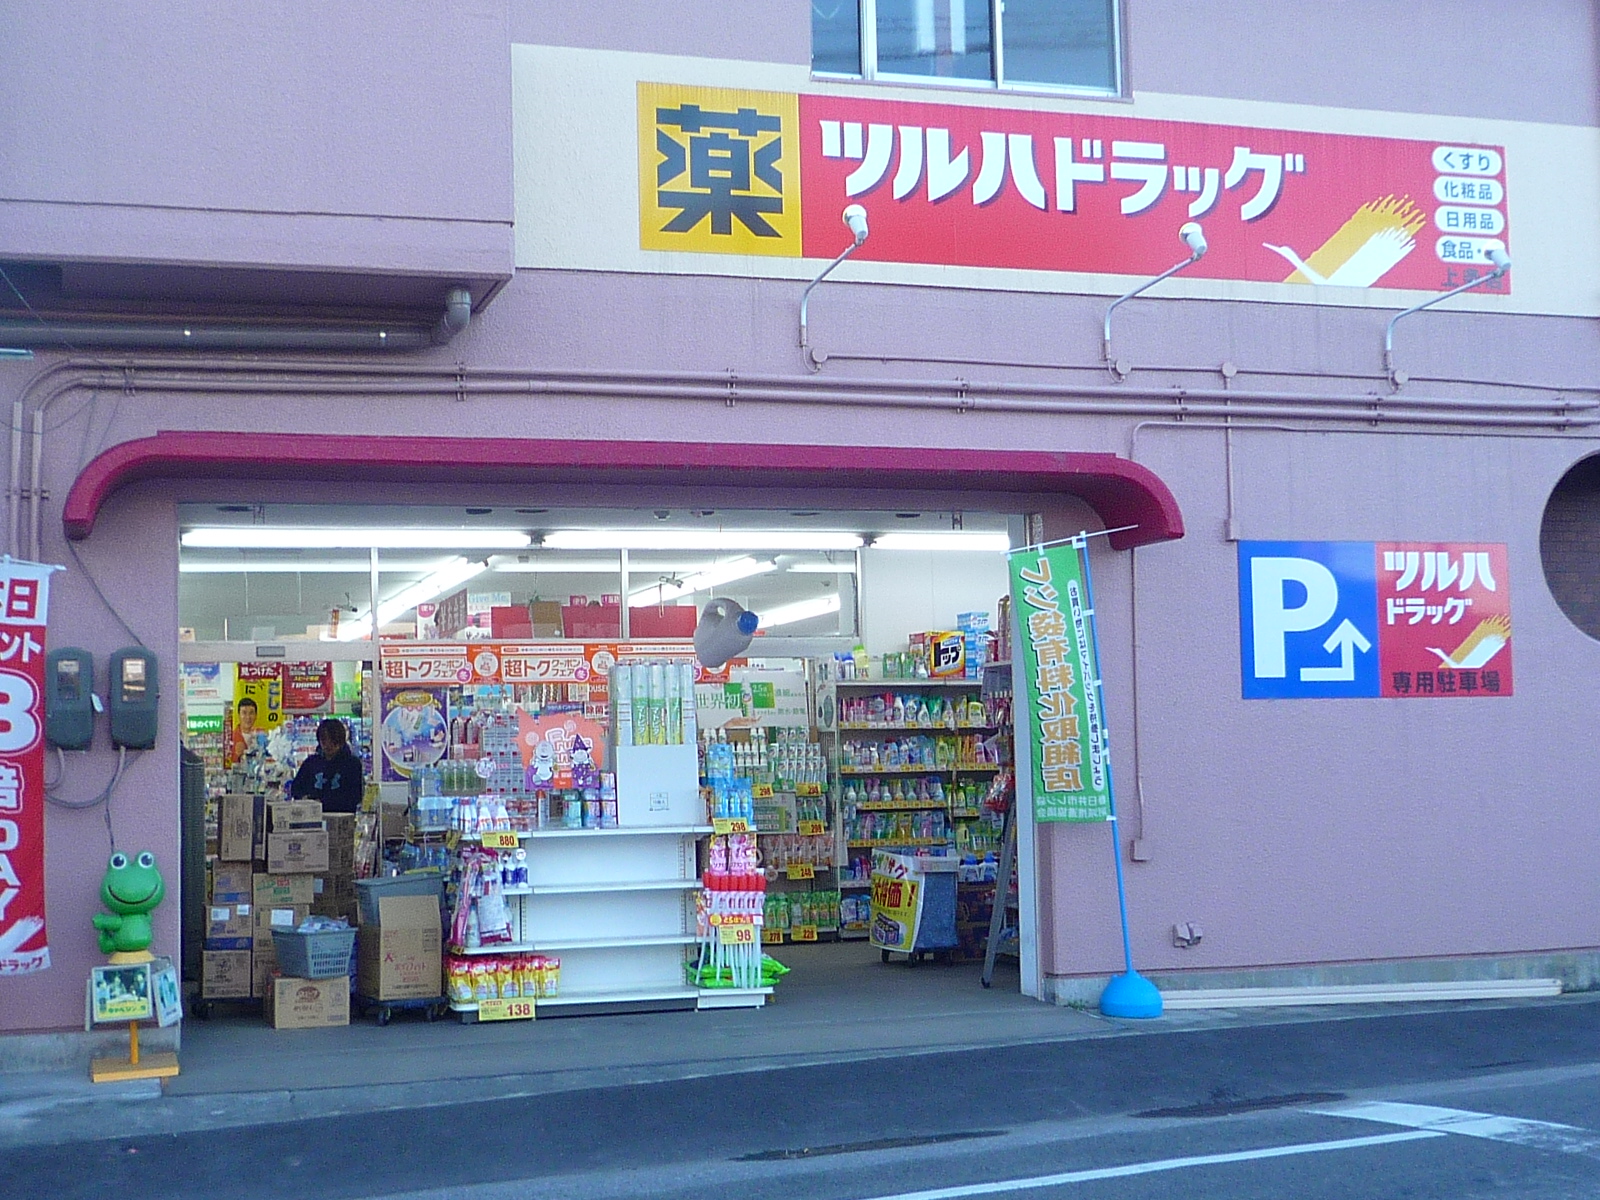 Dorakkusutoa. Tsuruha drag Kamijo shop 683m until (drugstore)